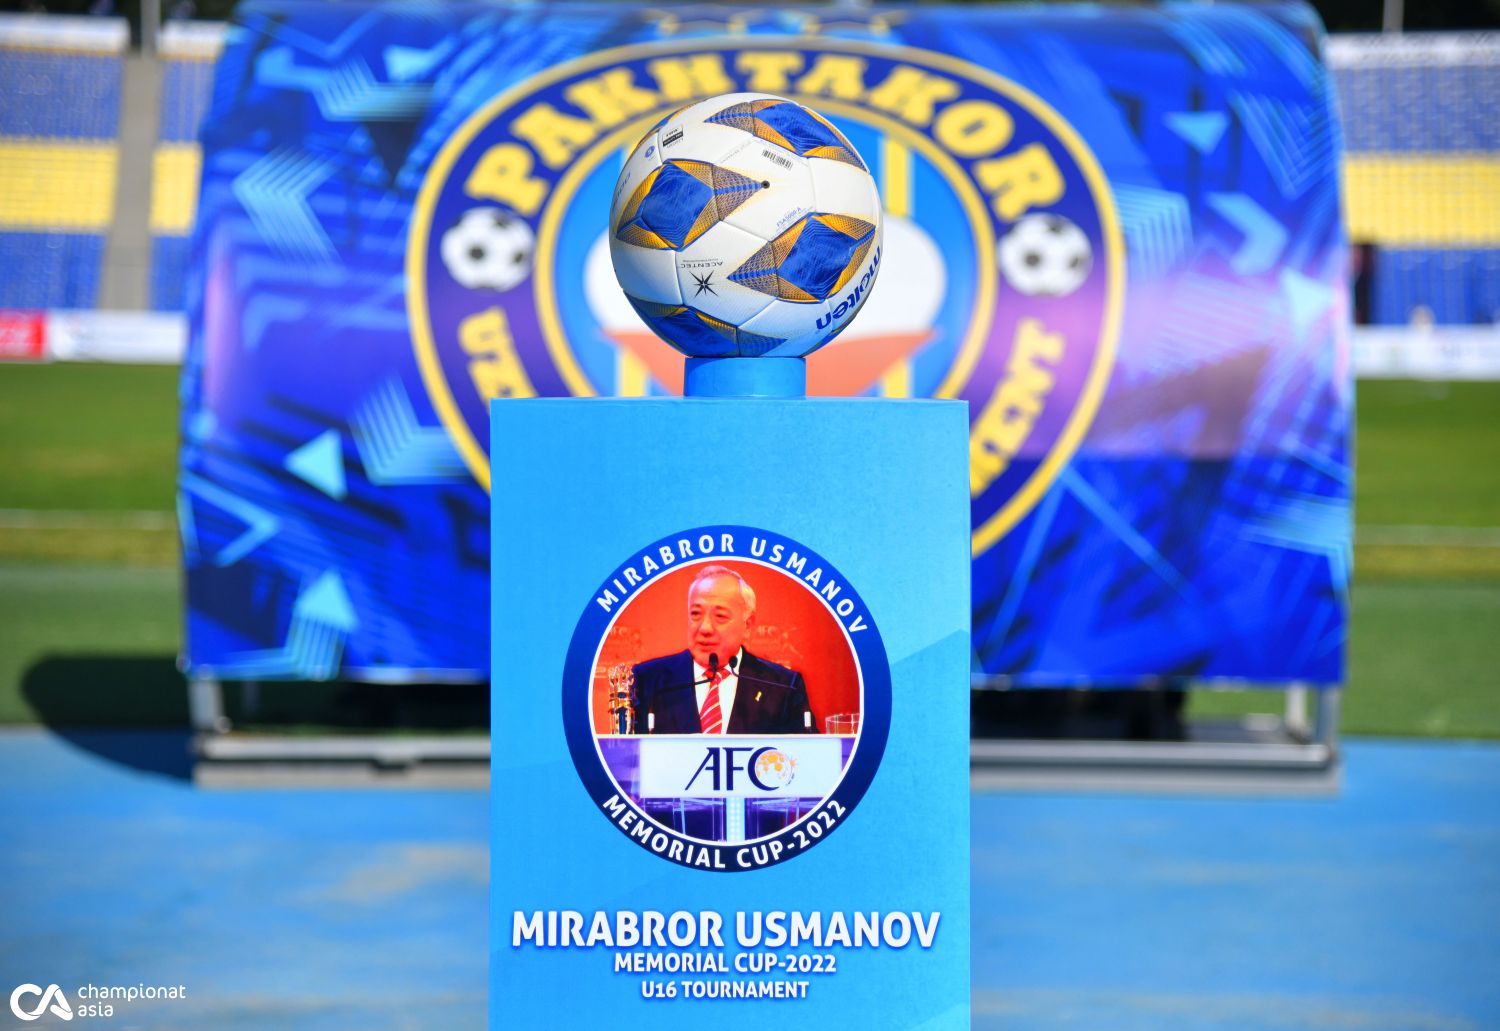 ФОТОГАЛЕРЕЯ. “Mirabror Usmanov Memorial Cup-2022”. Ўзбекистон - Тожикистон 5:0